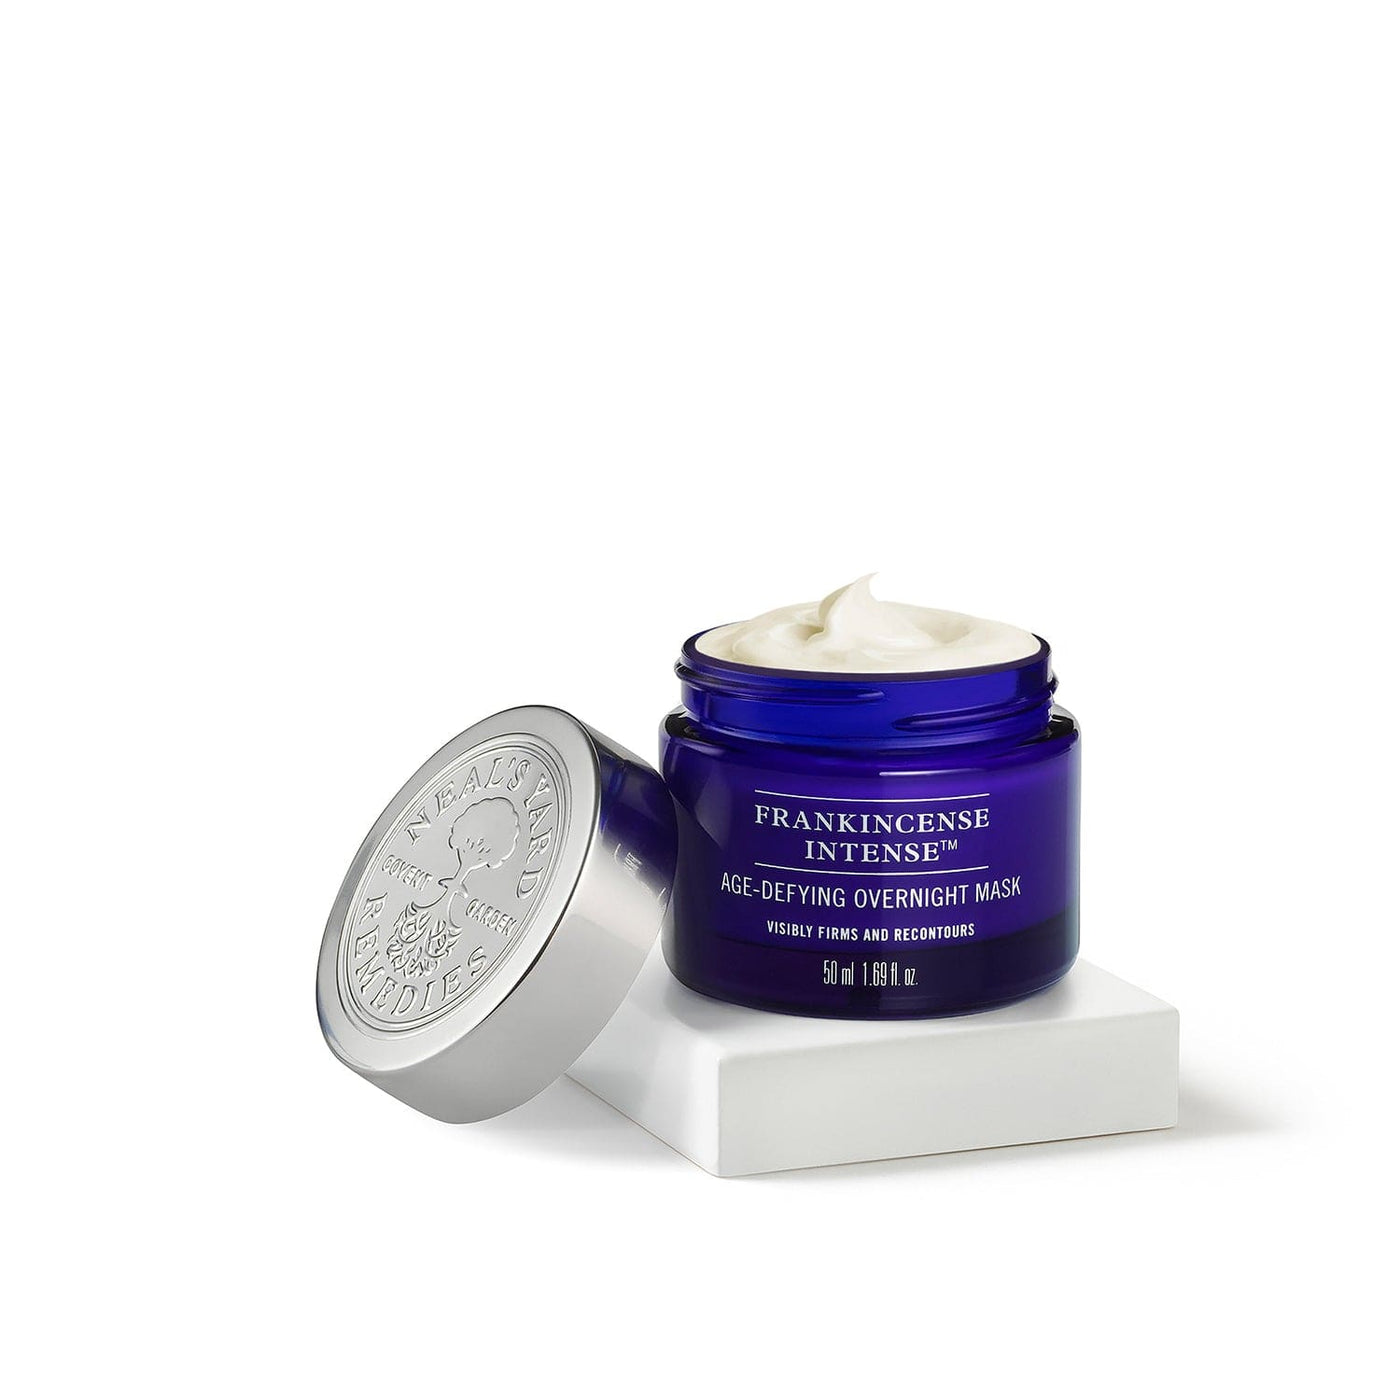 Neal's Yard Remedies Skincare Frankincense Intense™ Age-Defying Overnight Mask 50ml